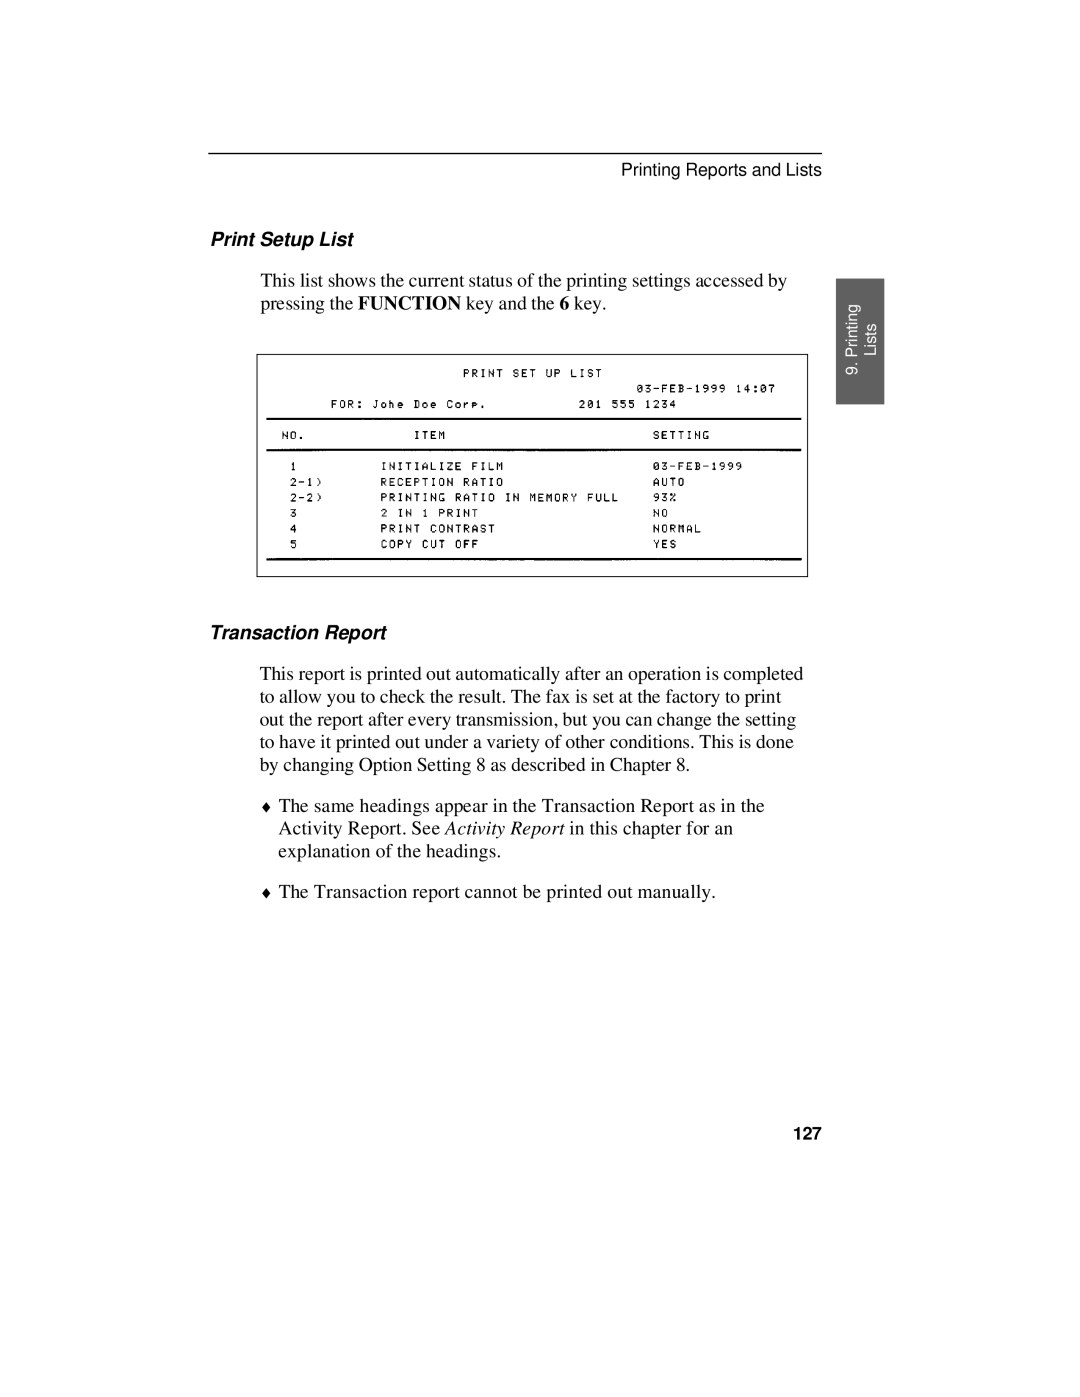 Sharp UX-470 operation manual Print Setup List, Transaction Report, 127 